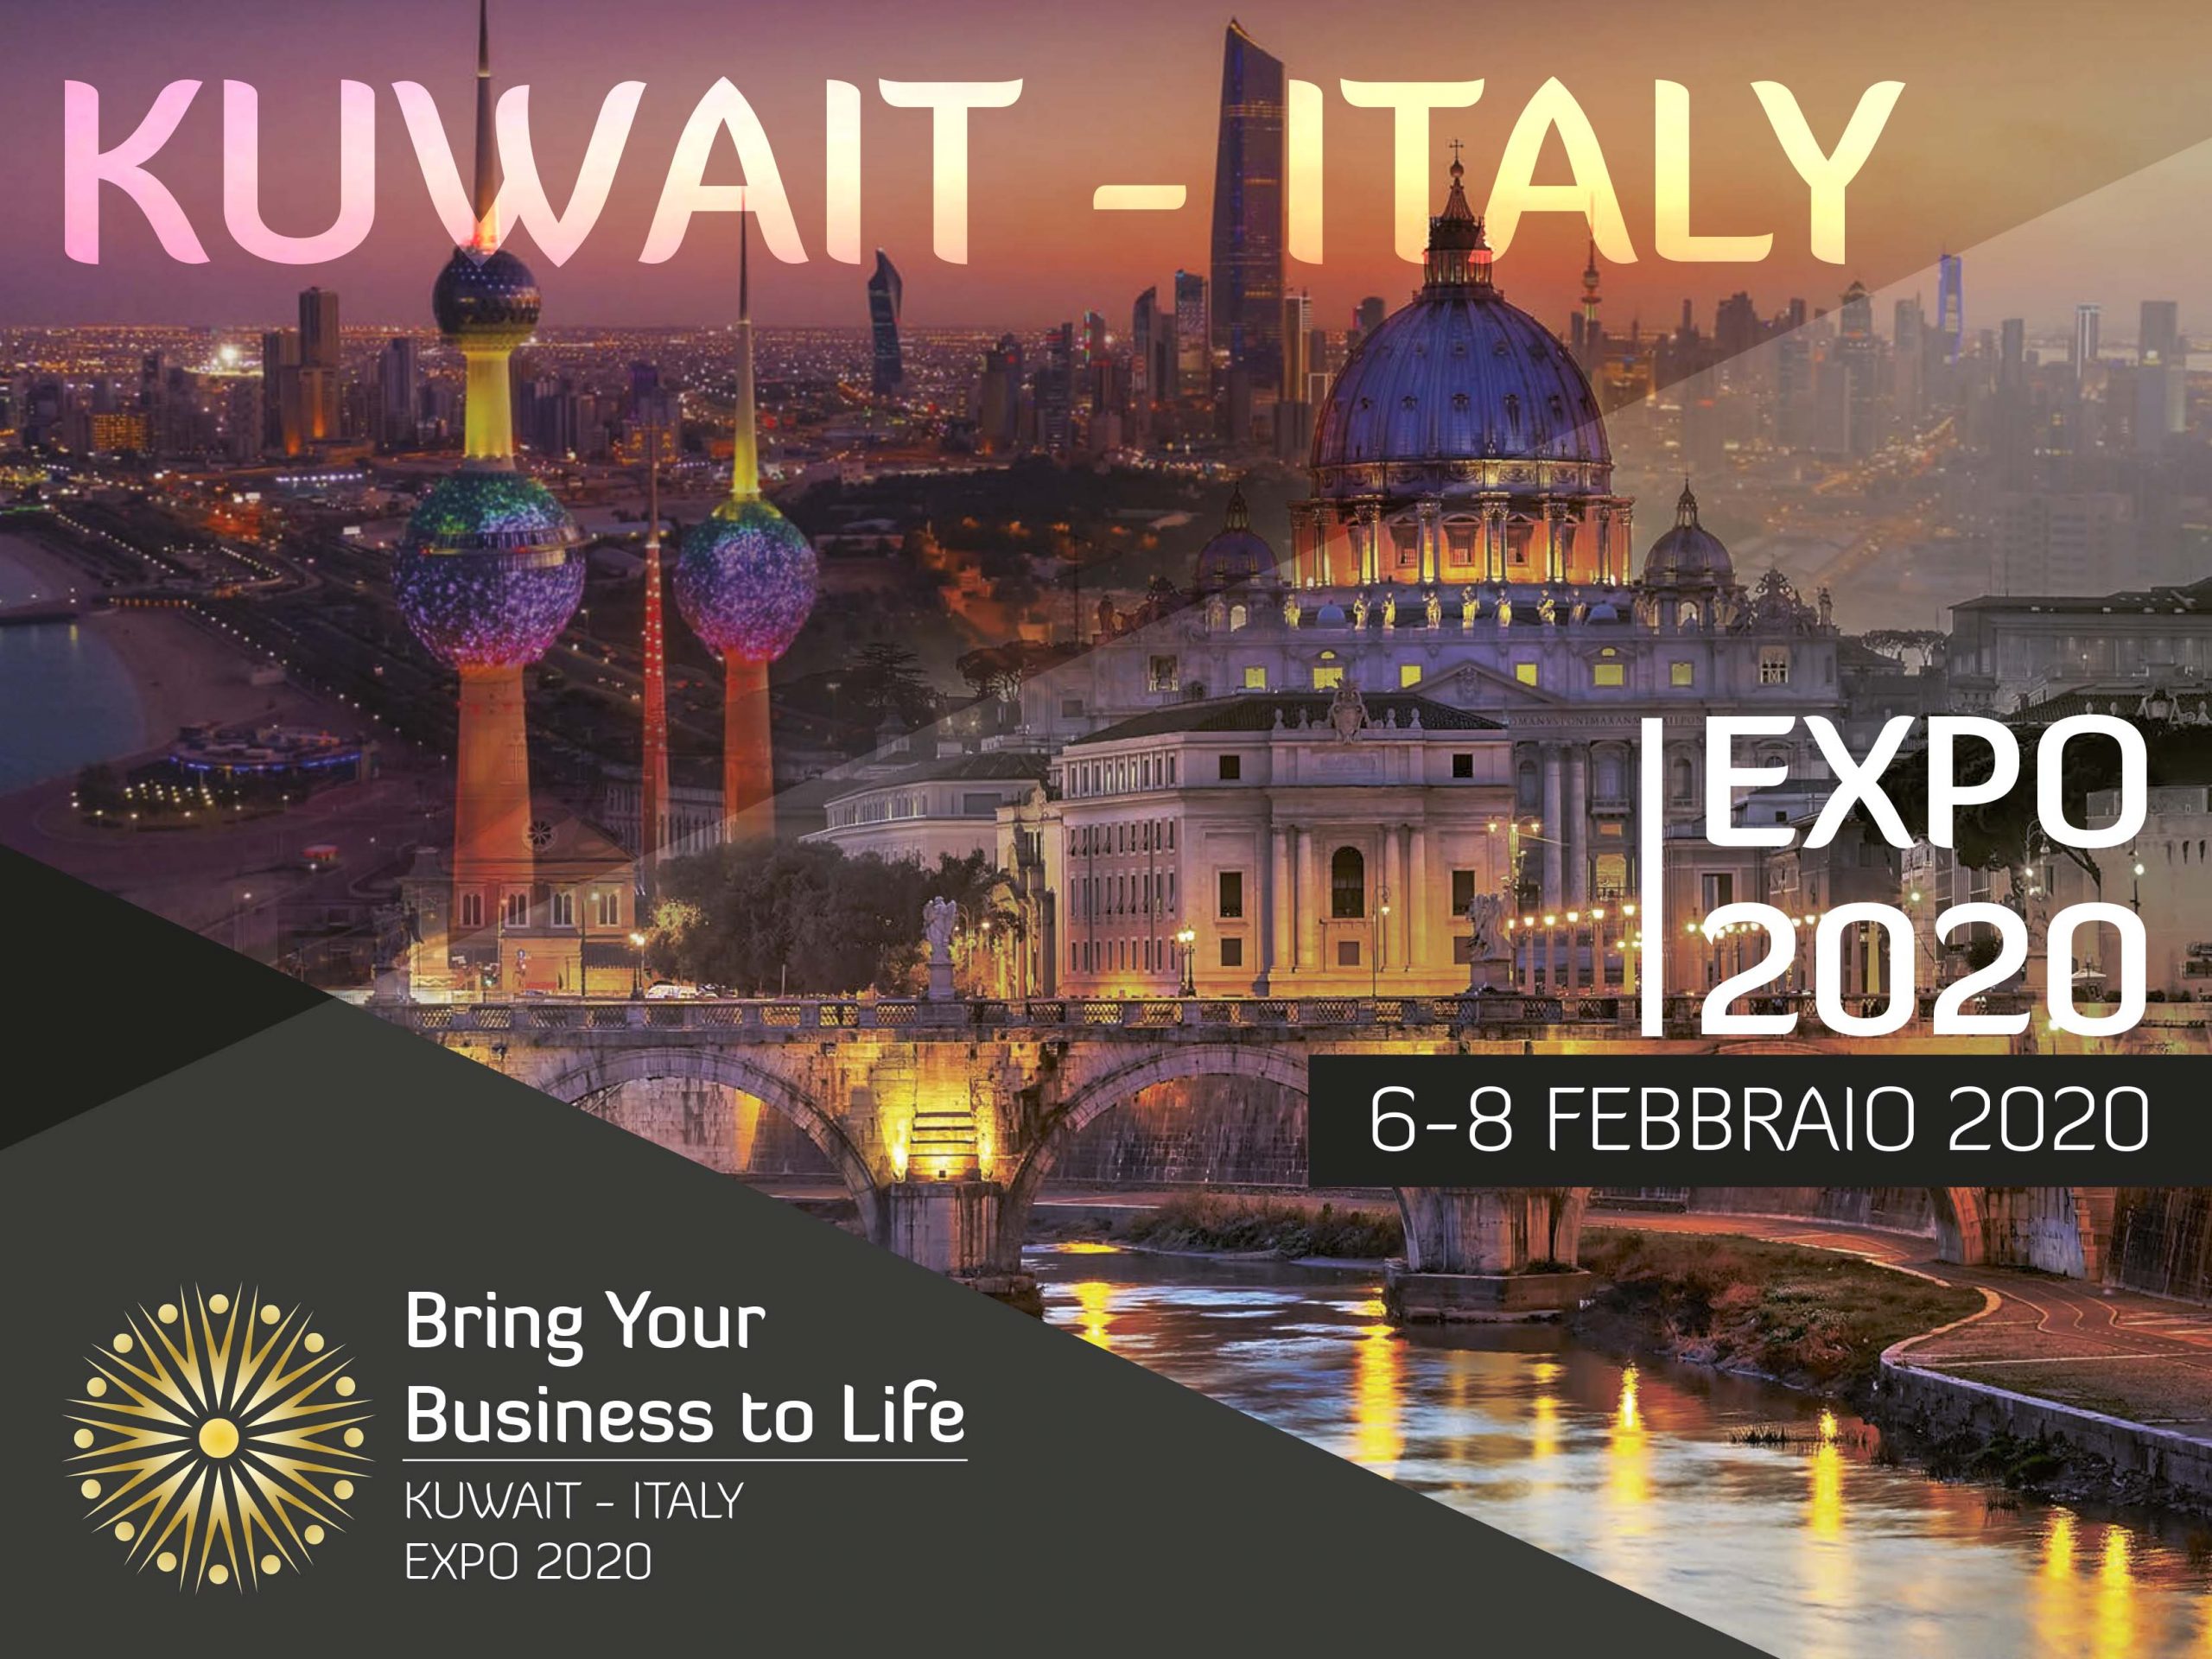 Kuwait Italy Expo 2020